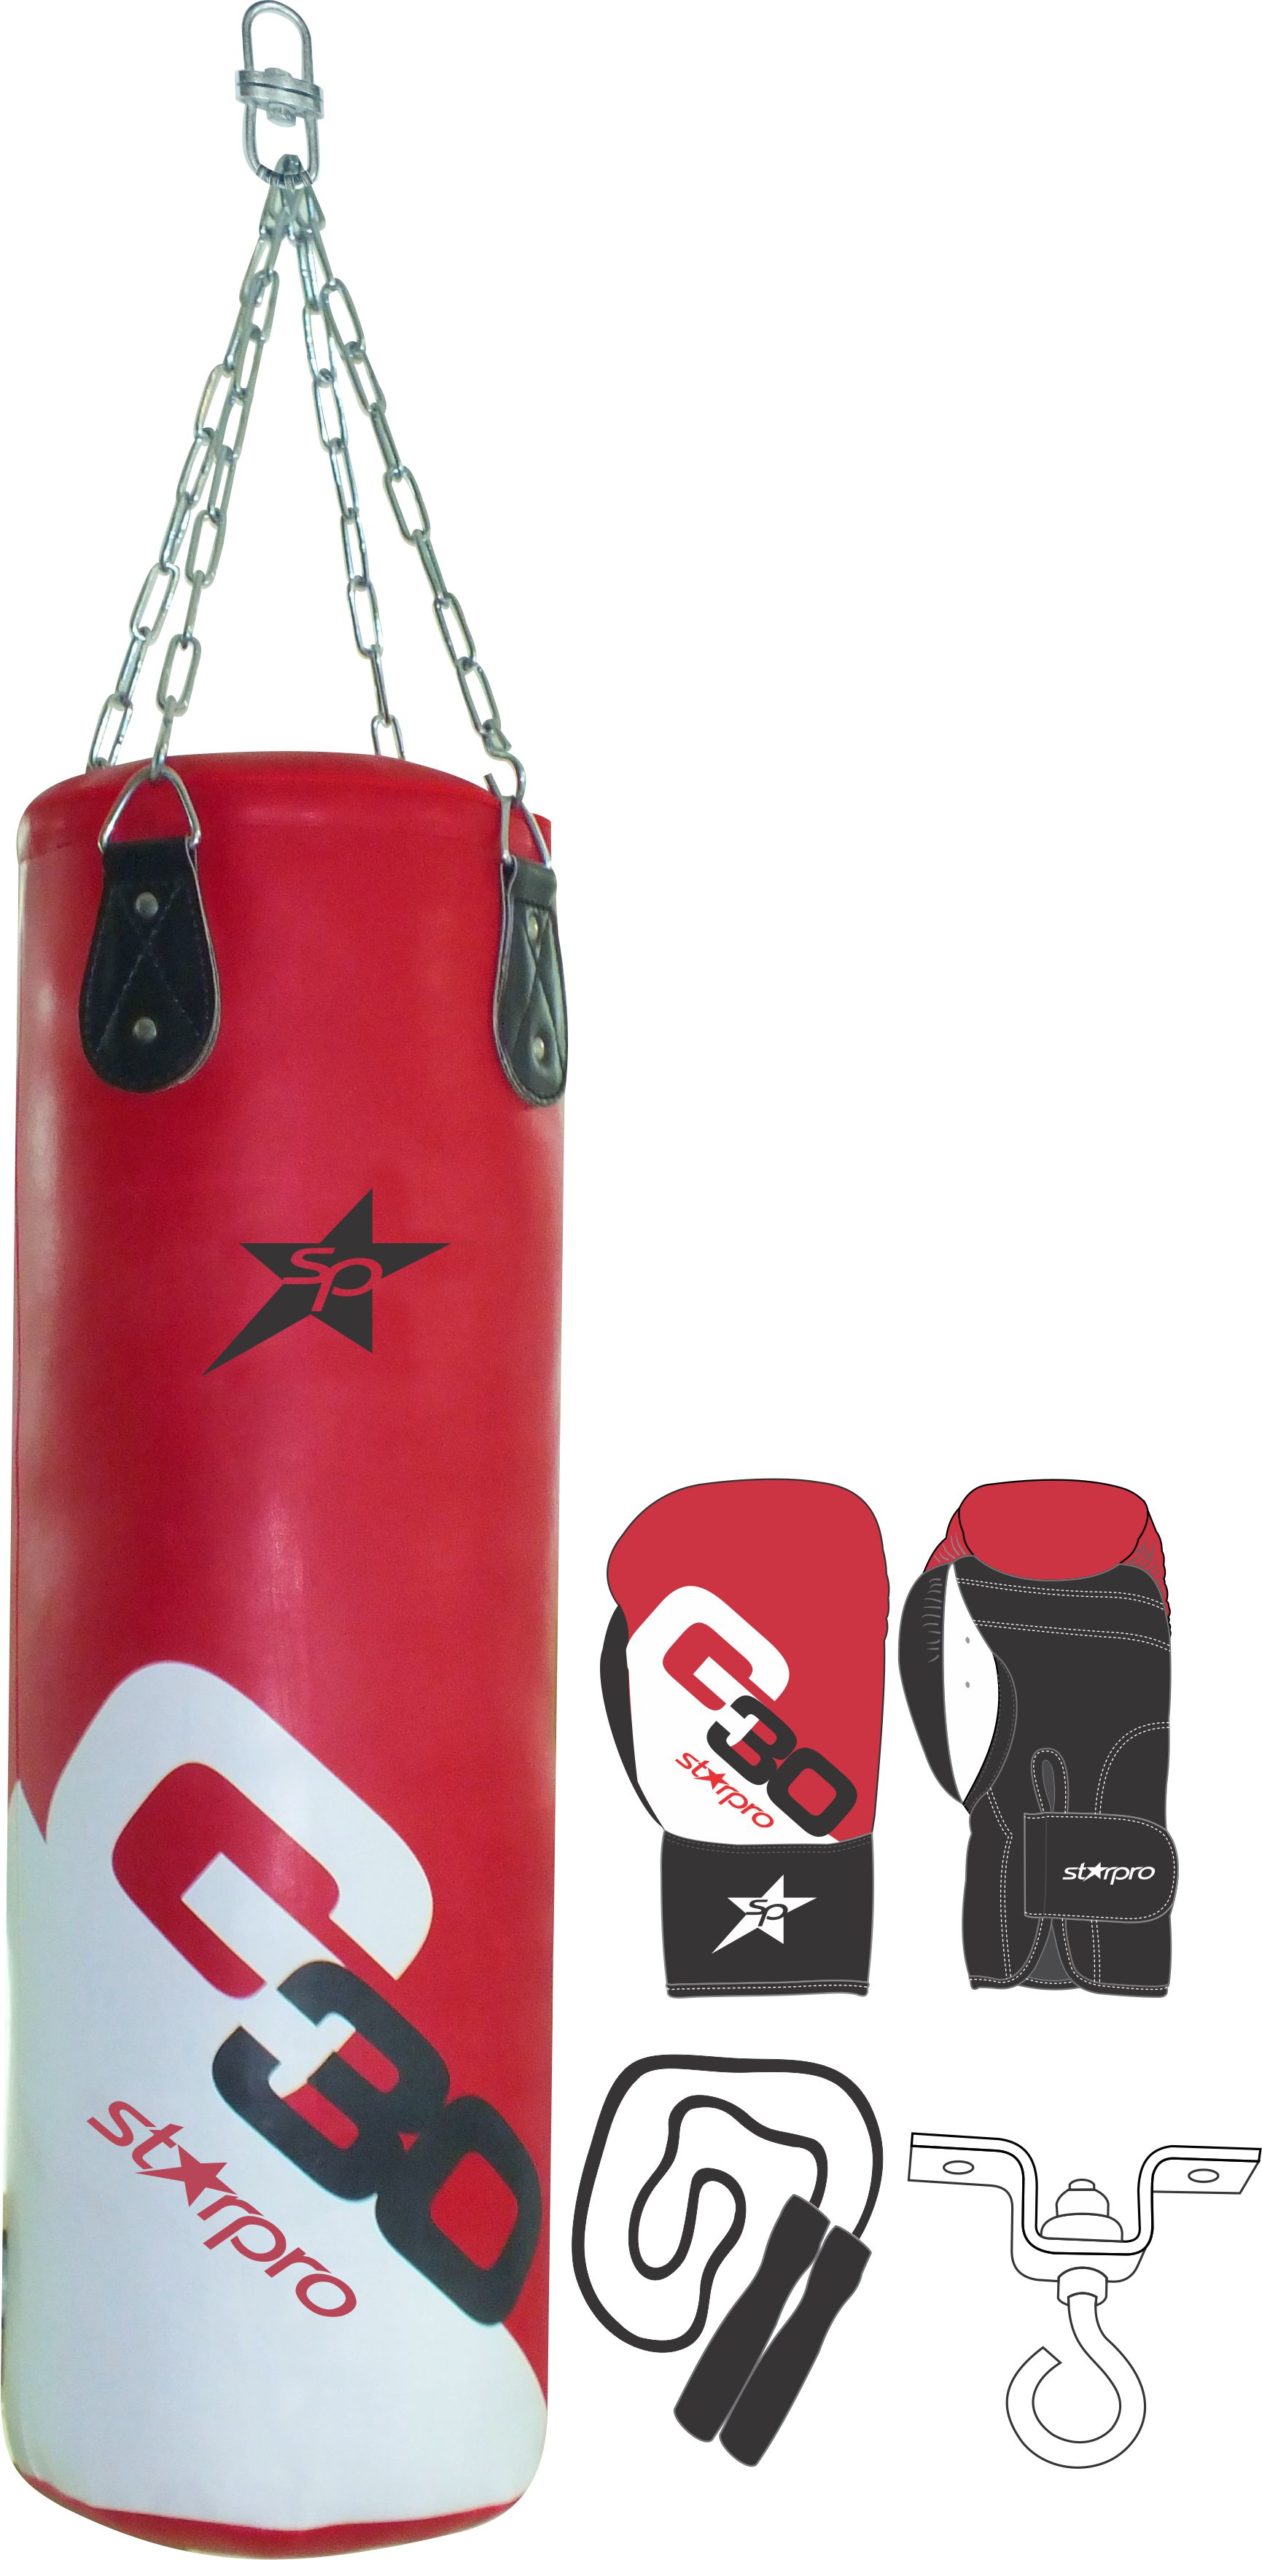 Starpro G30 Training Boxing Set